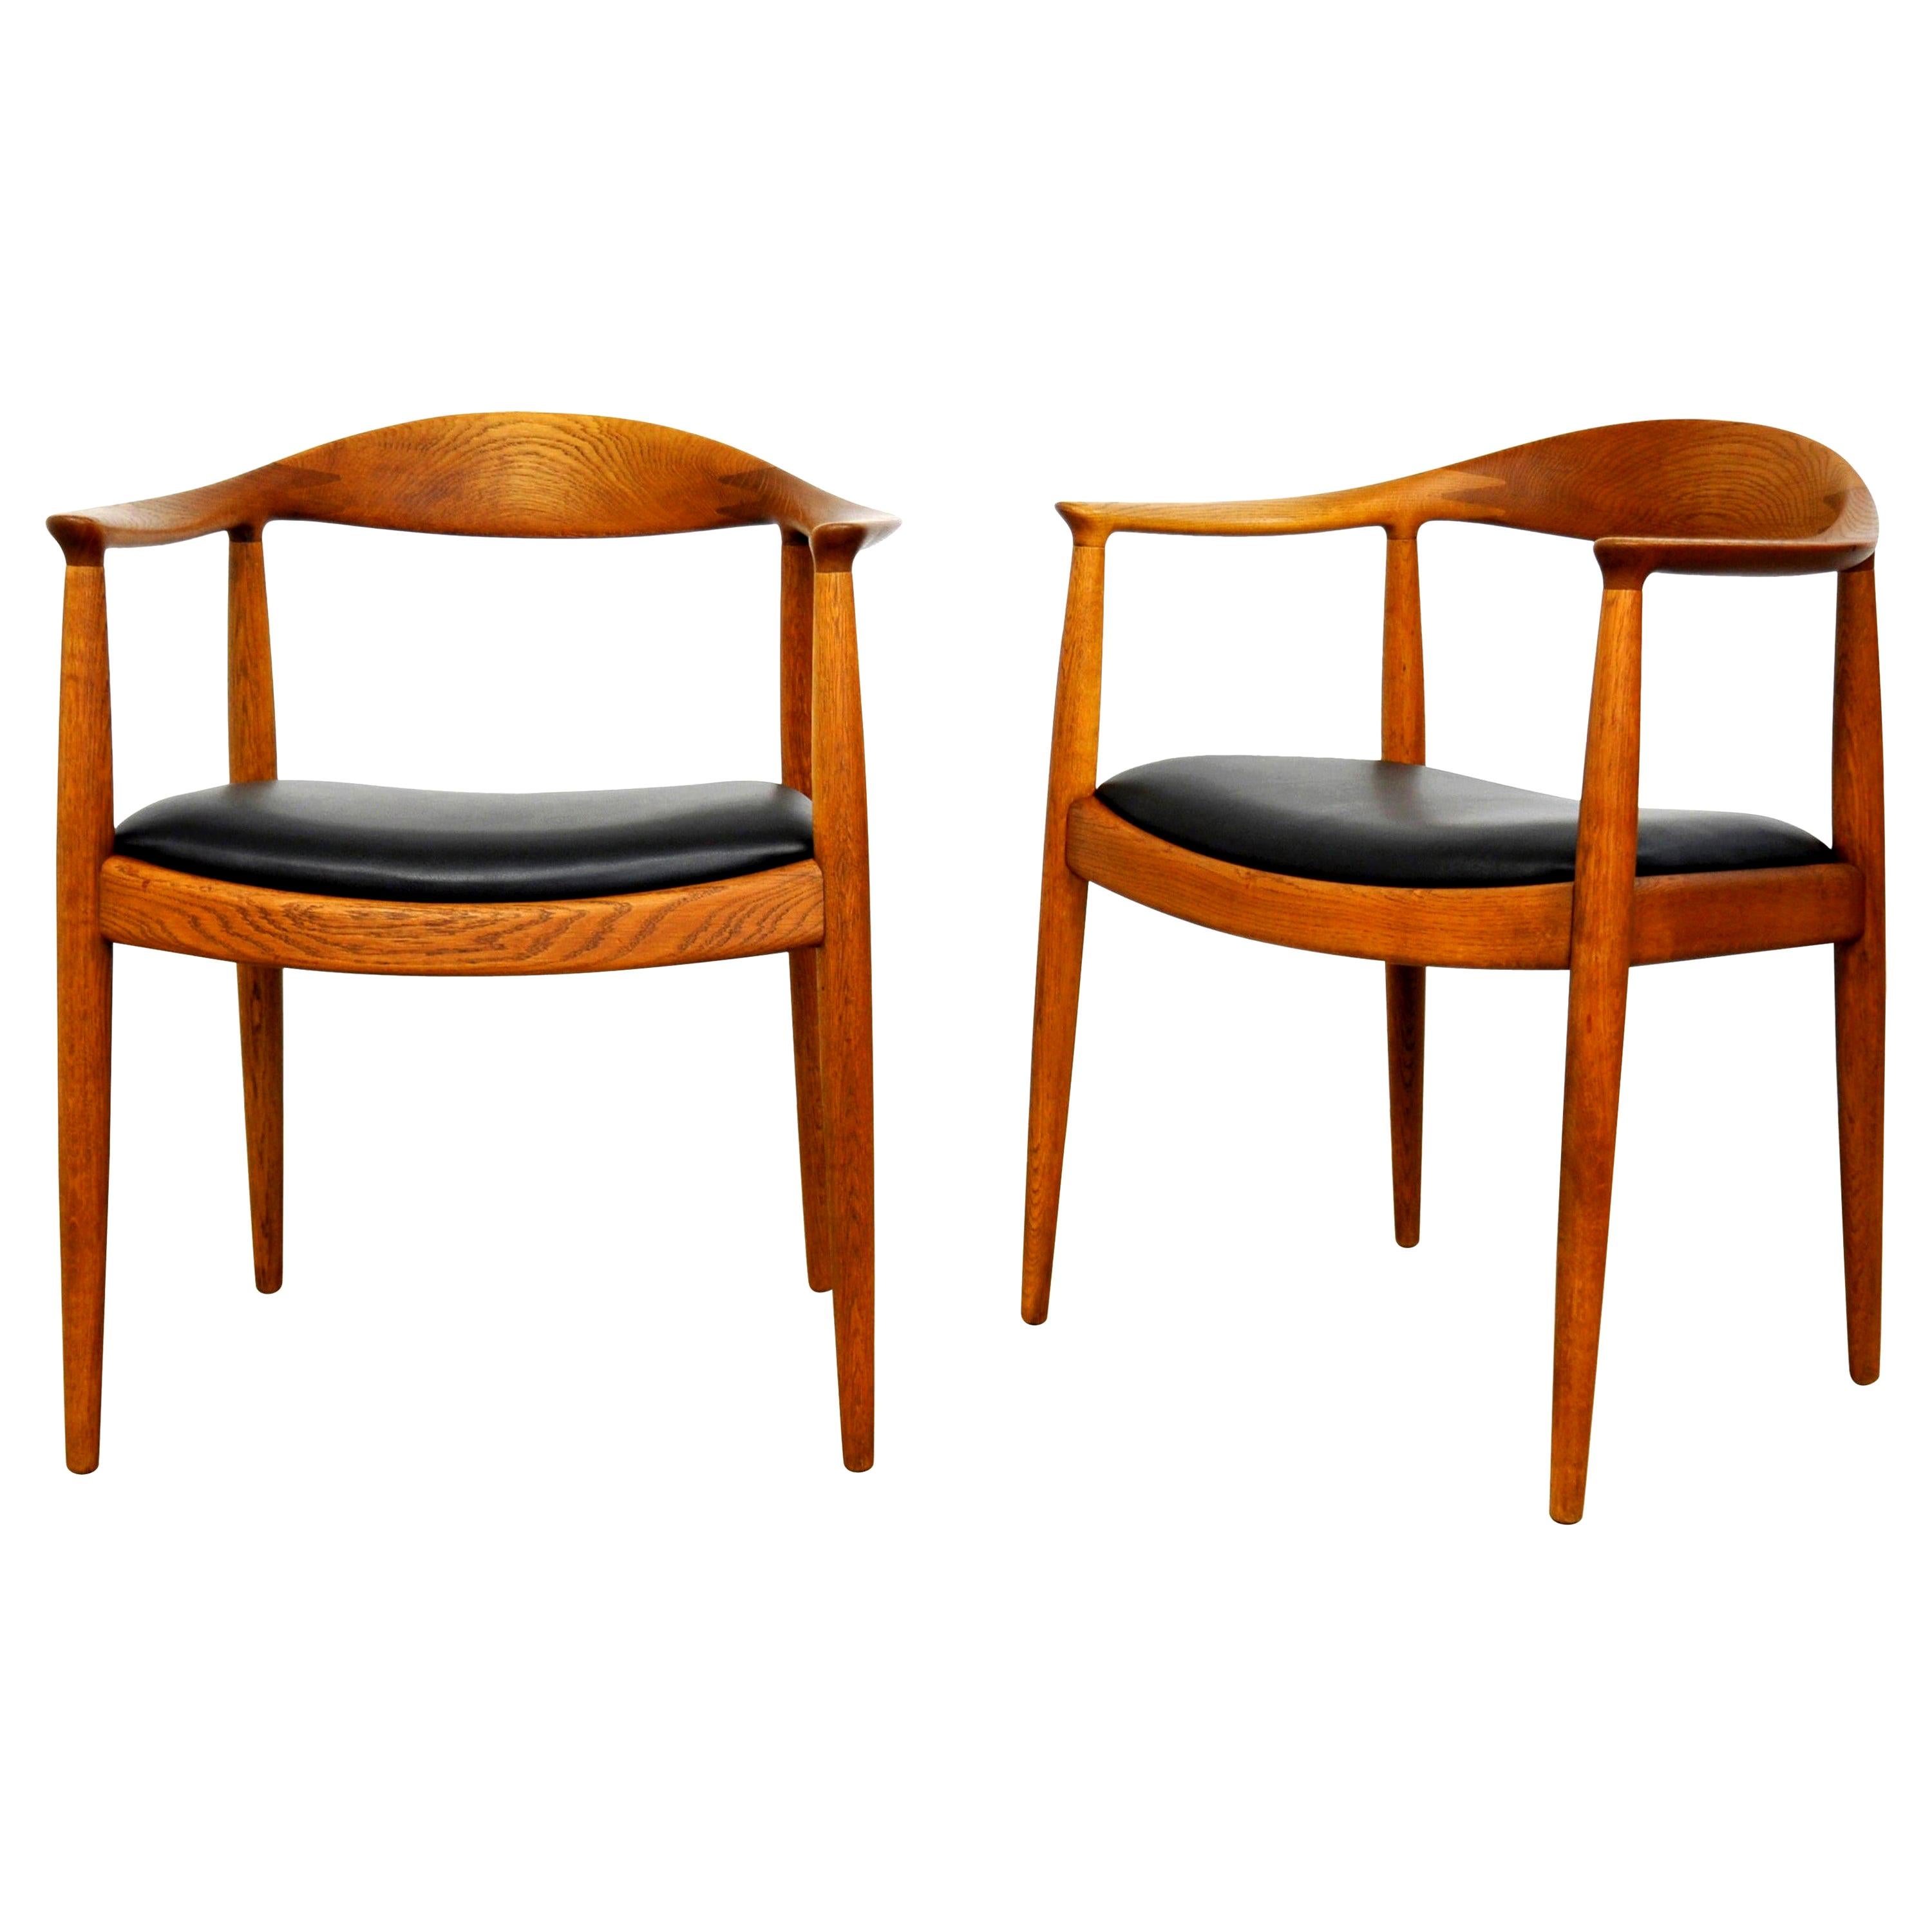 Pair of Hans Wegner for Johannes Hansen Oak and Black Leather Round Chairs